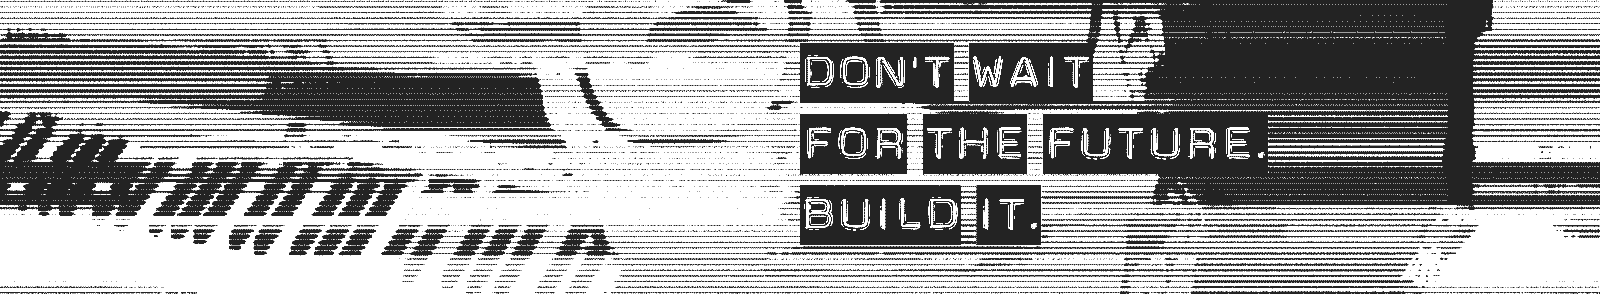 futuristic image says "don't wait for the future. build it."